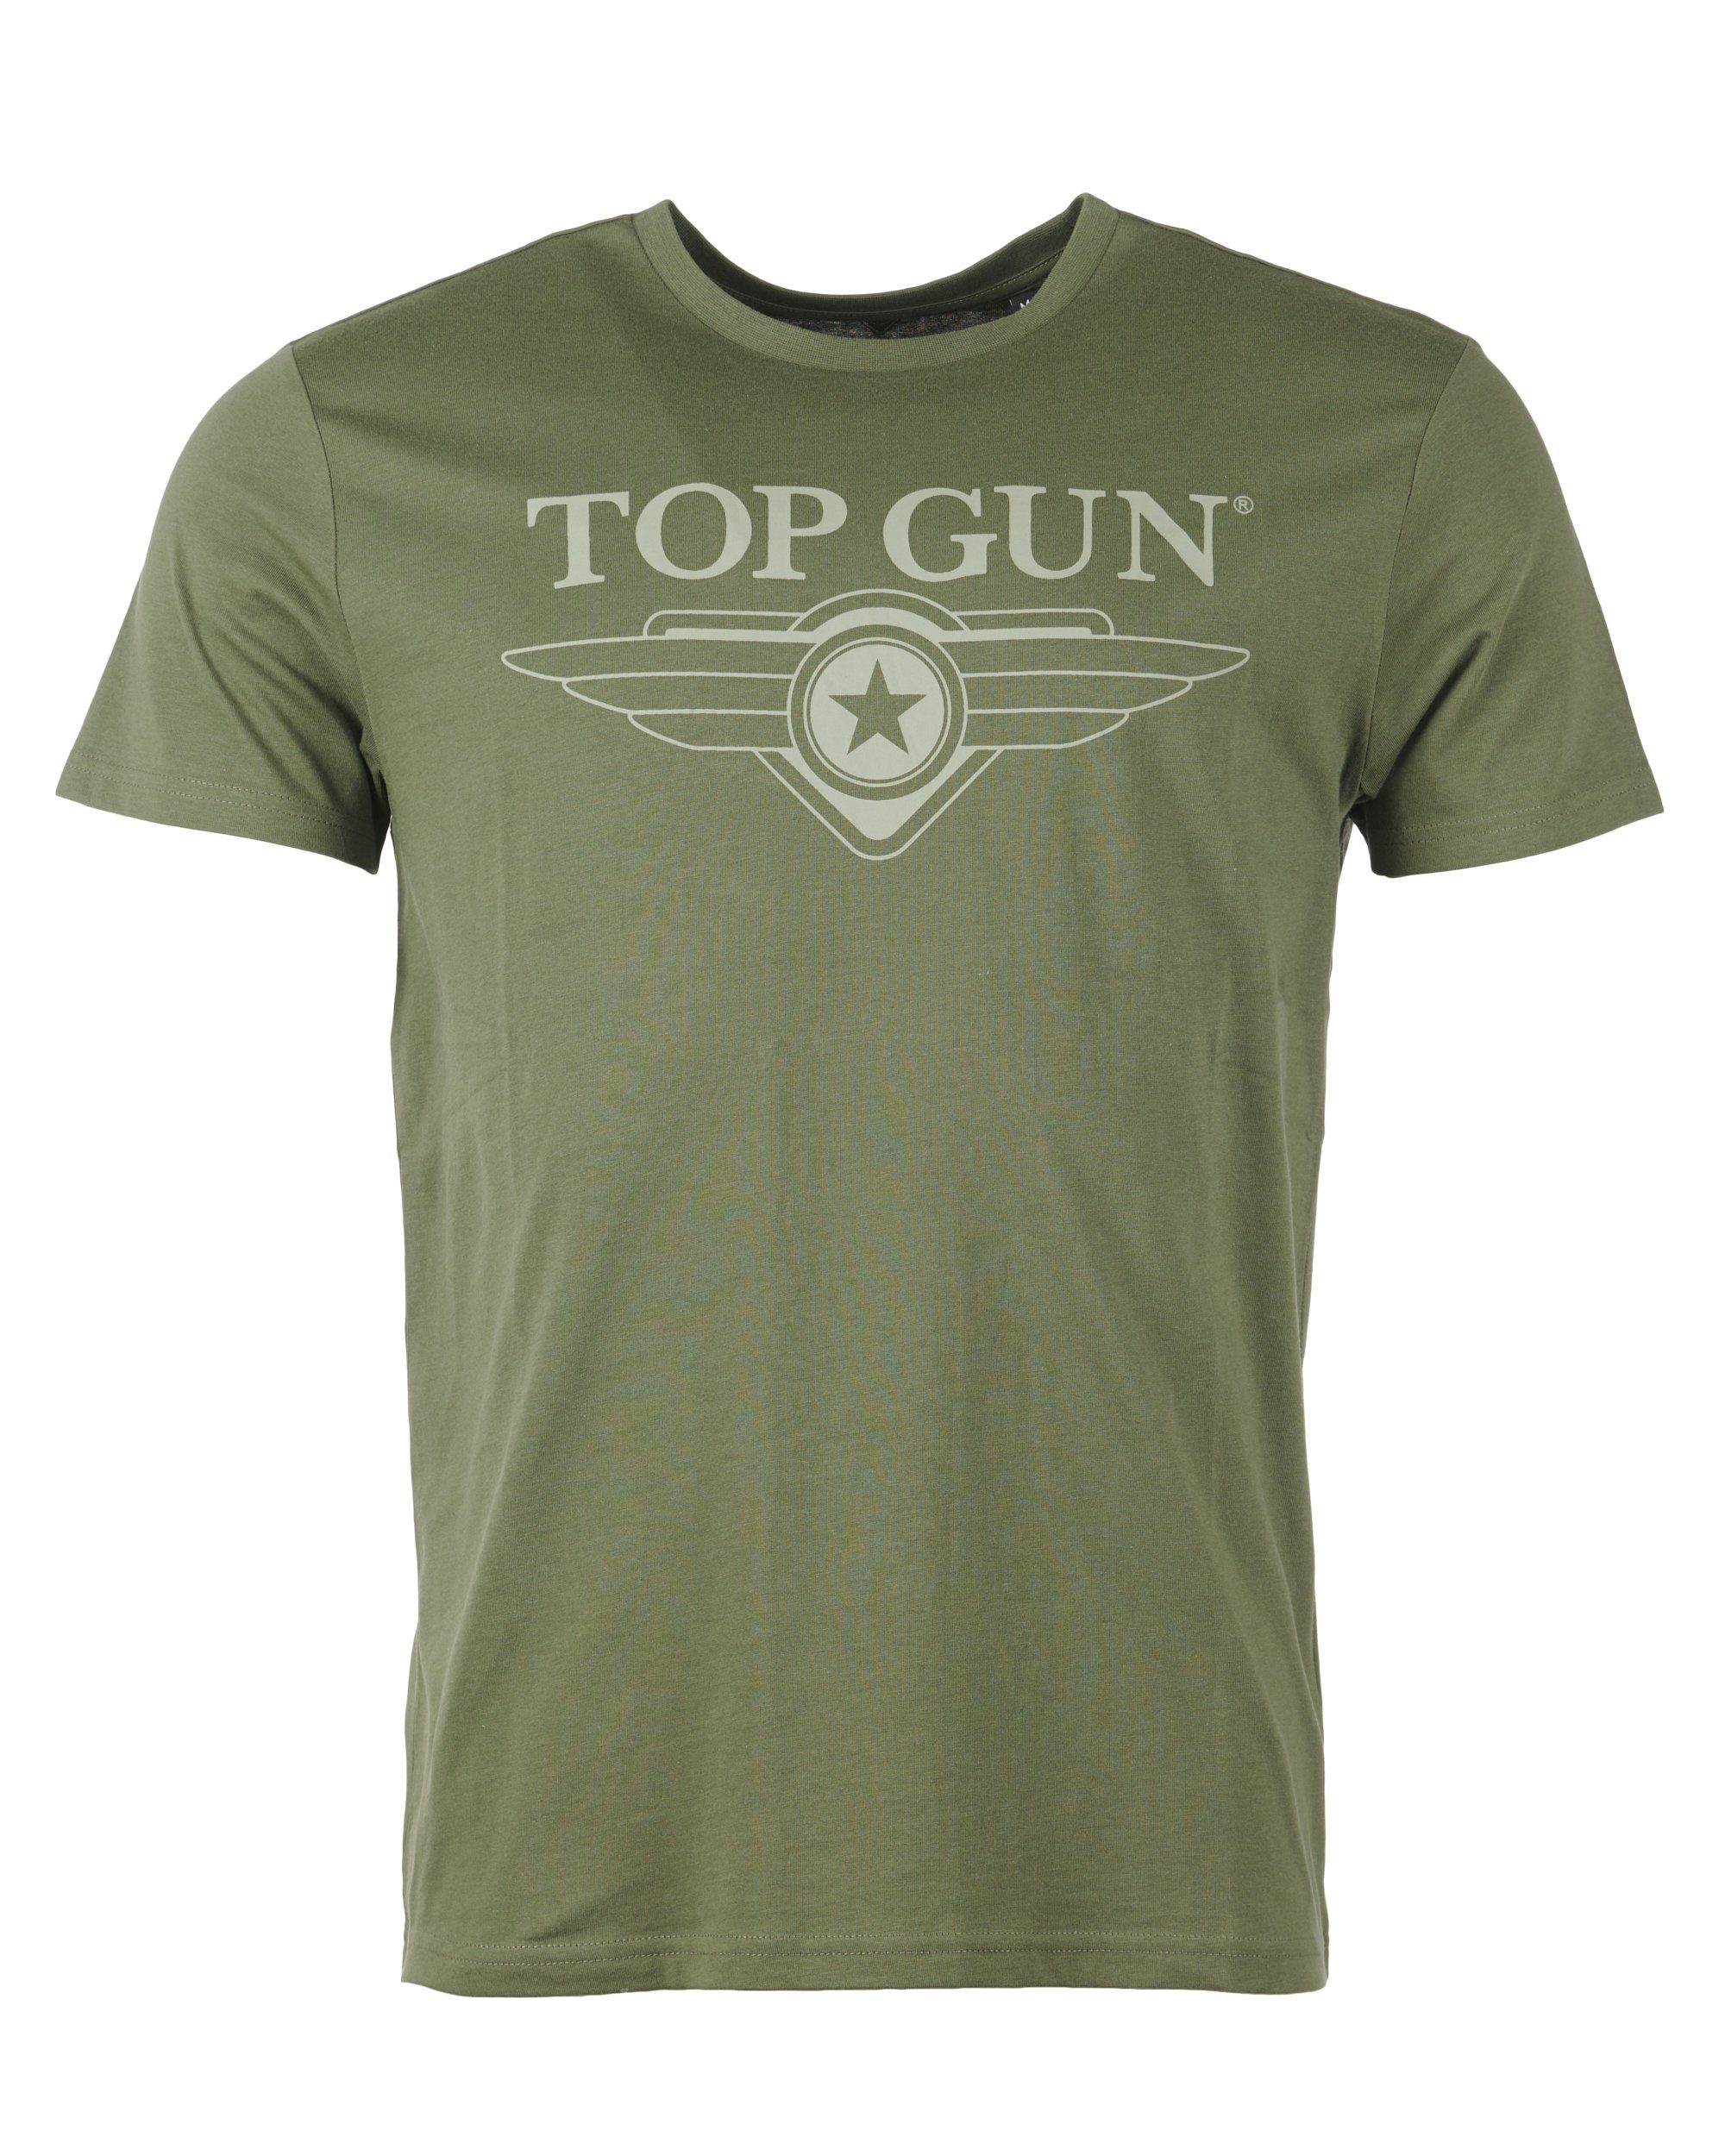 GUN T-Shirt olive TG20201045 TOP